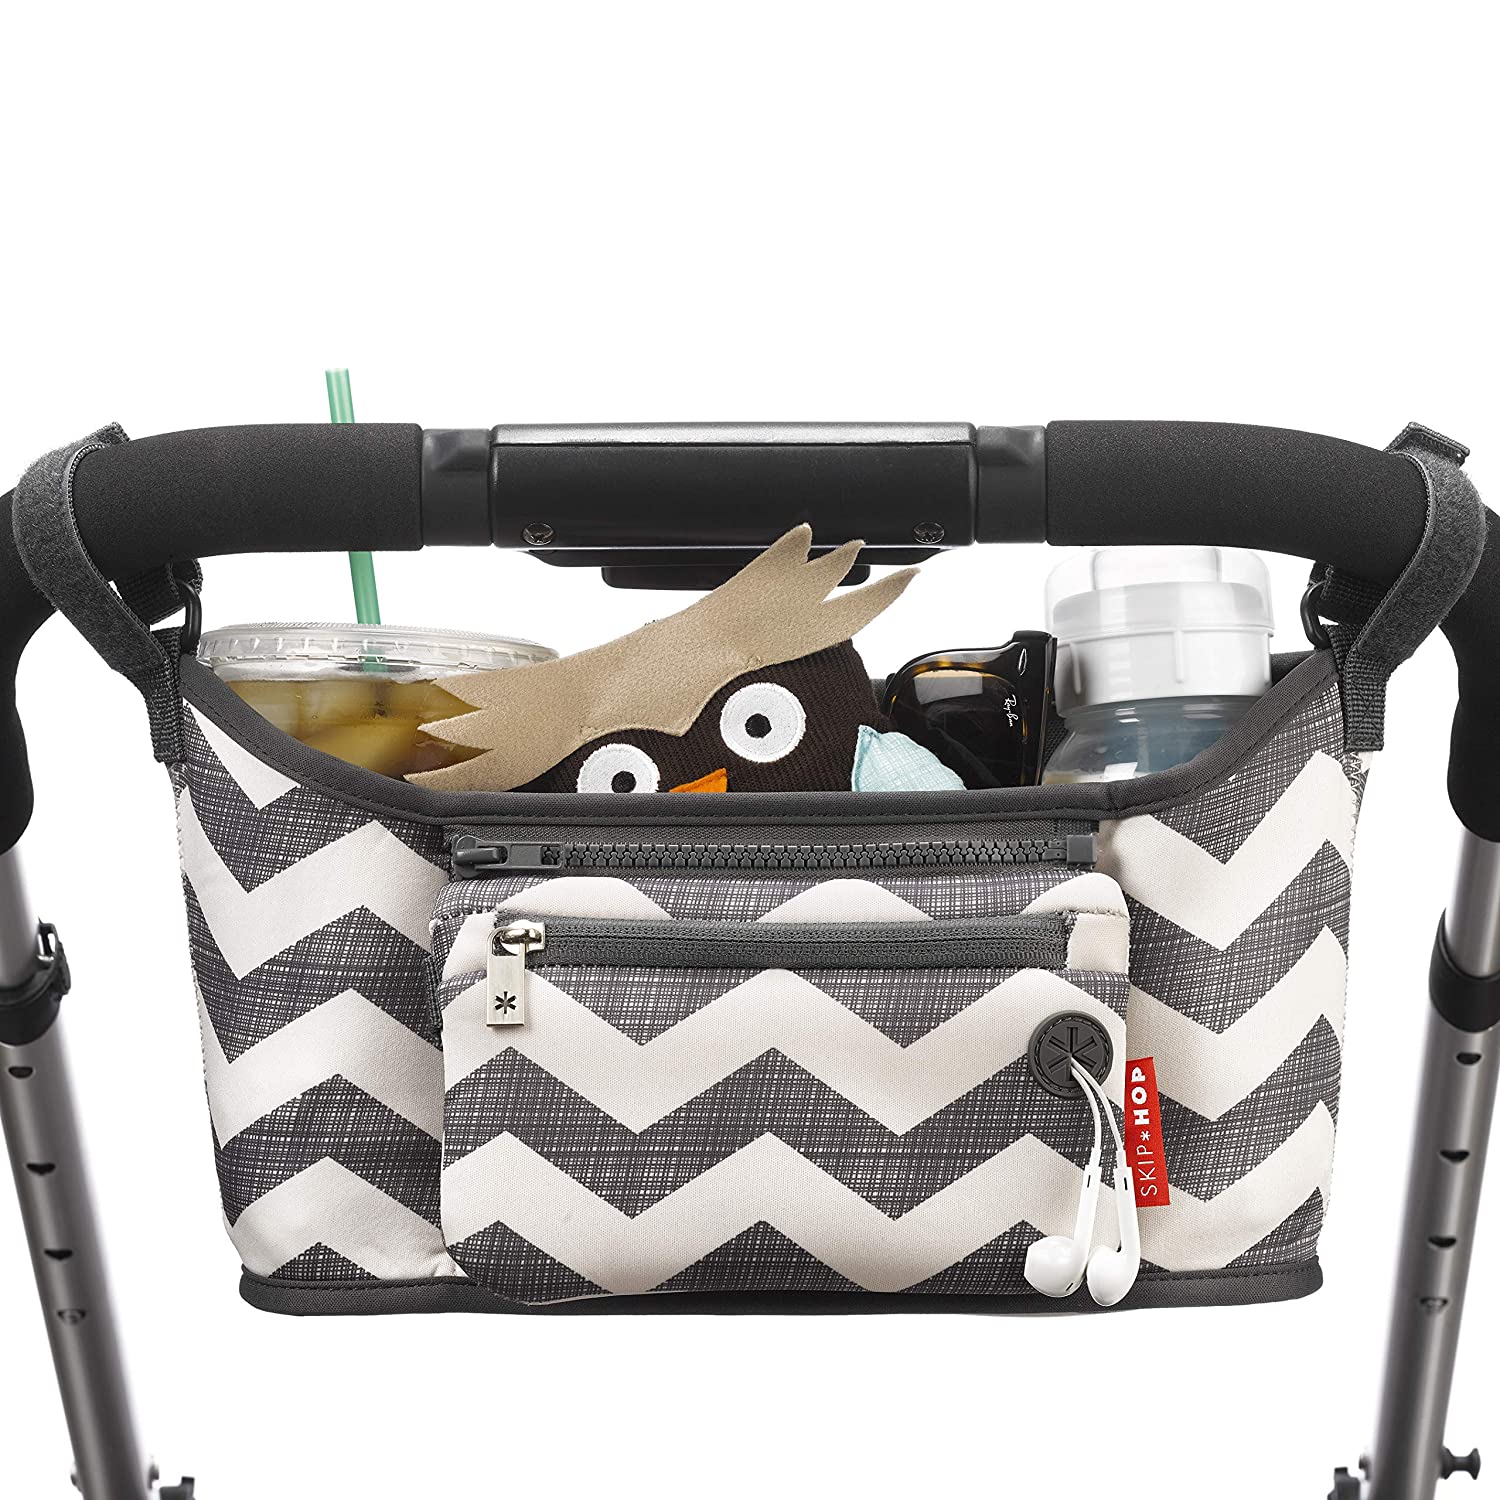 SKIP HOP Grab and Go Stroller Organizer Chevron - ANB Baby -baby activity center